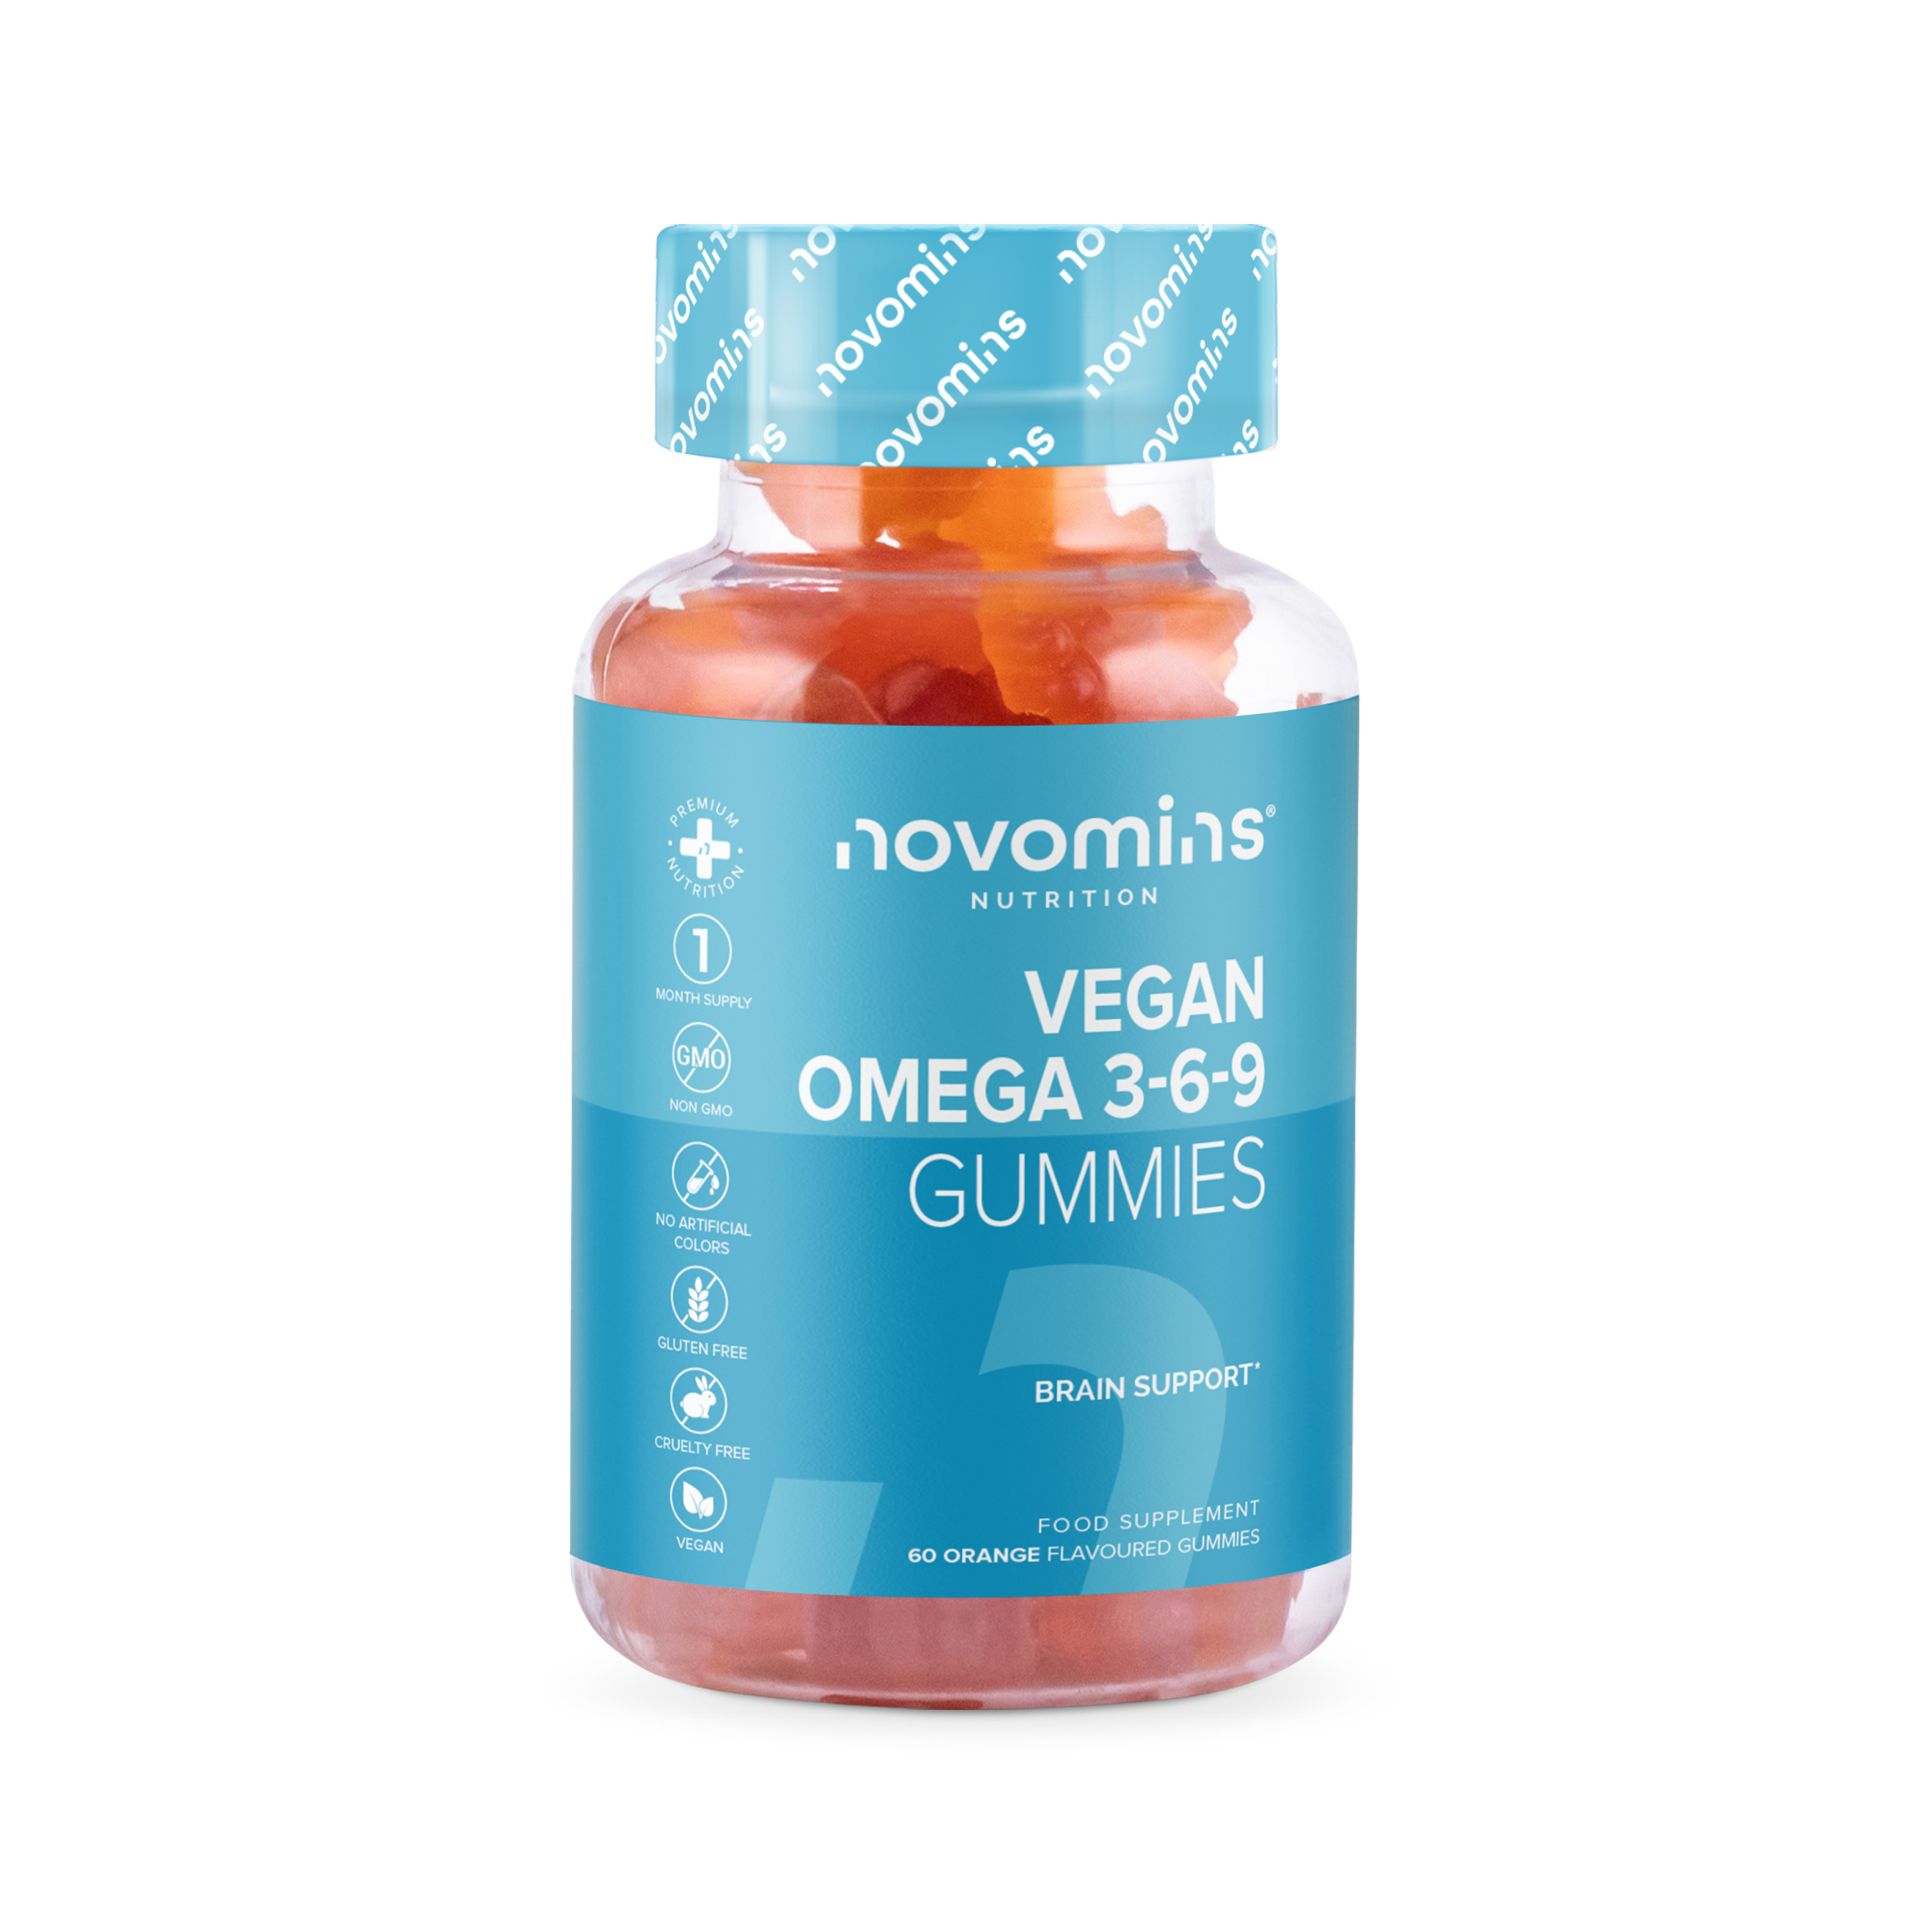 Novomins Vegan Omega 3-6-9 Gummies